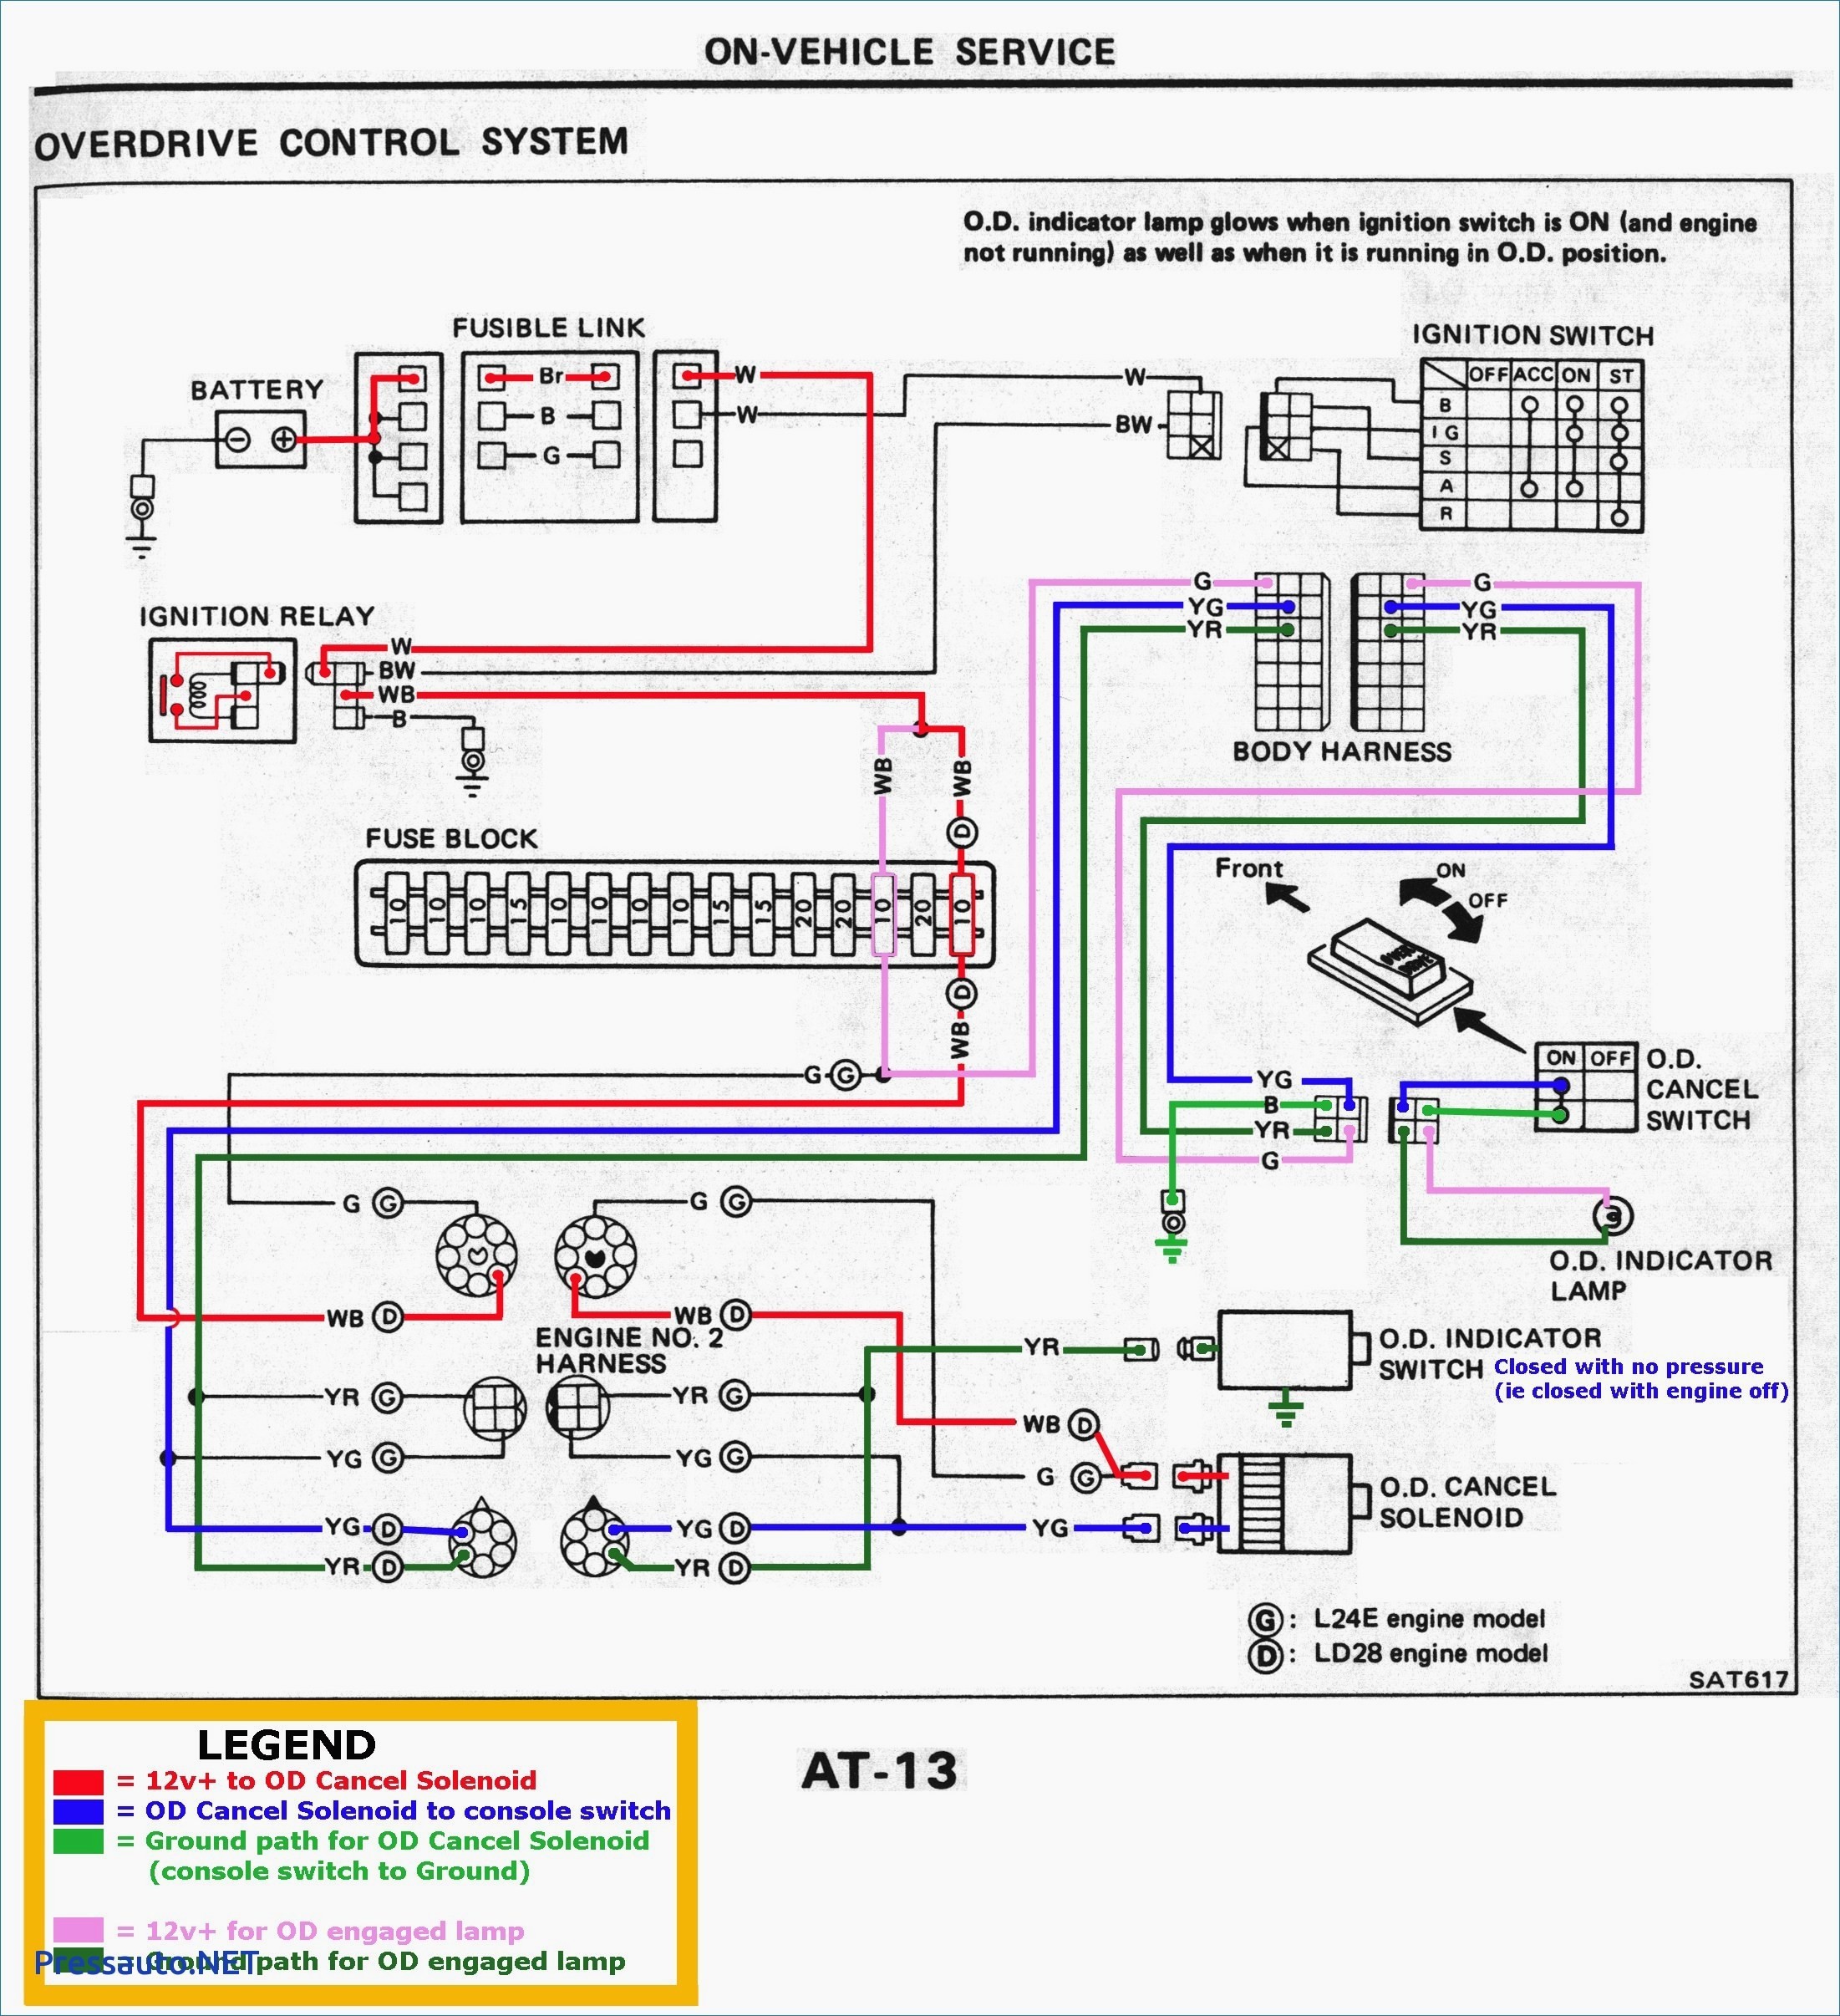 Electrical Lighting Wiring Diagrams Luxury Ceiling Light Wiring Diagram Diagram Of Electrical Lighting Wiring Diagrams